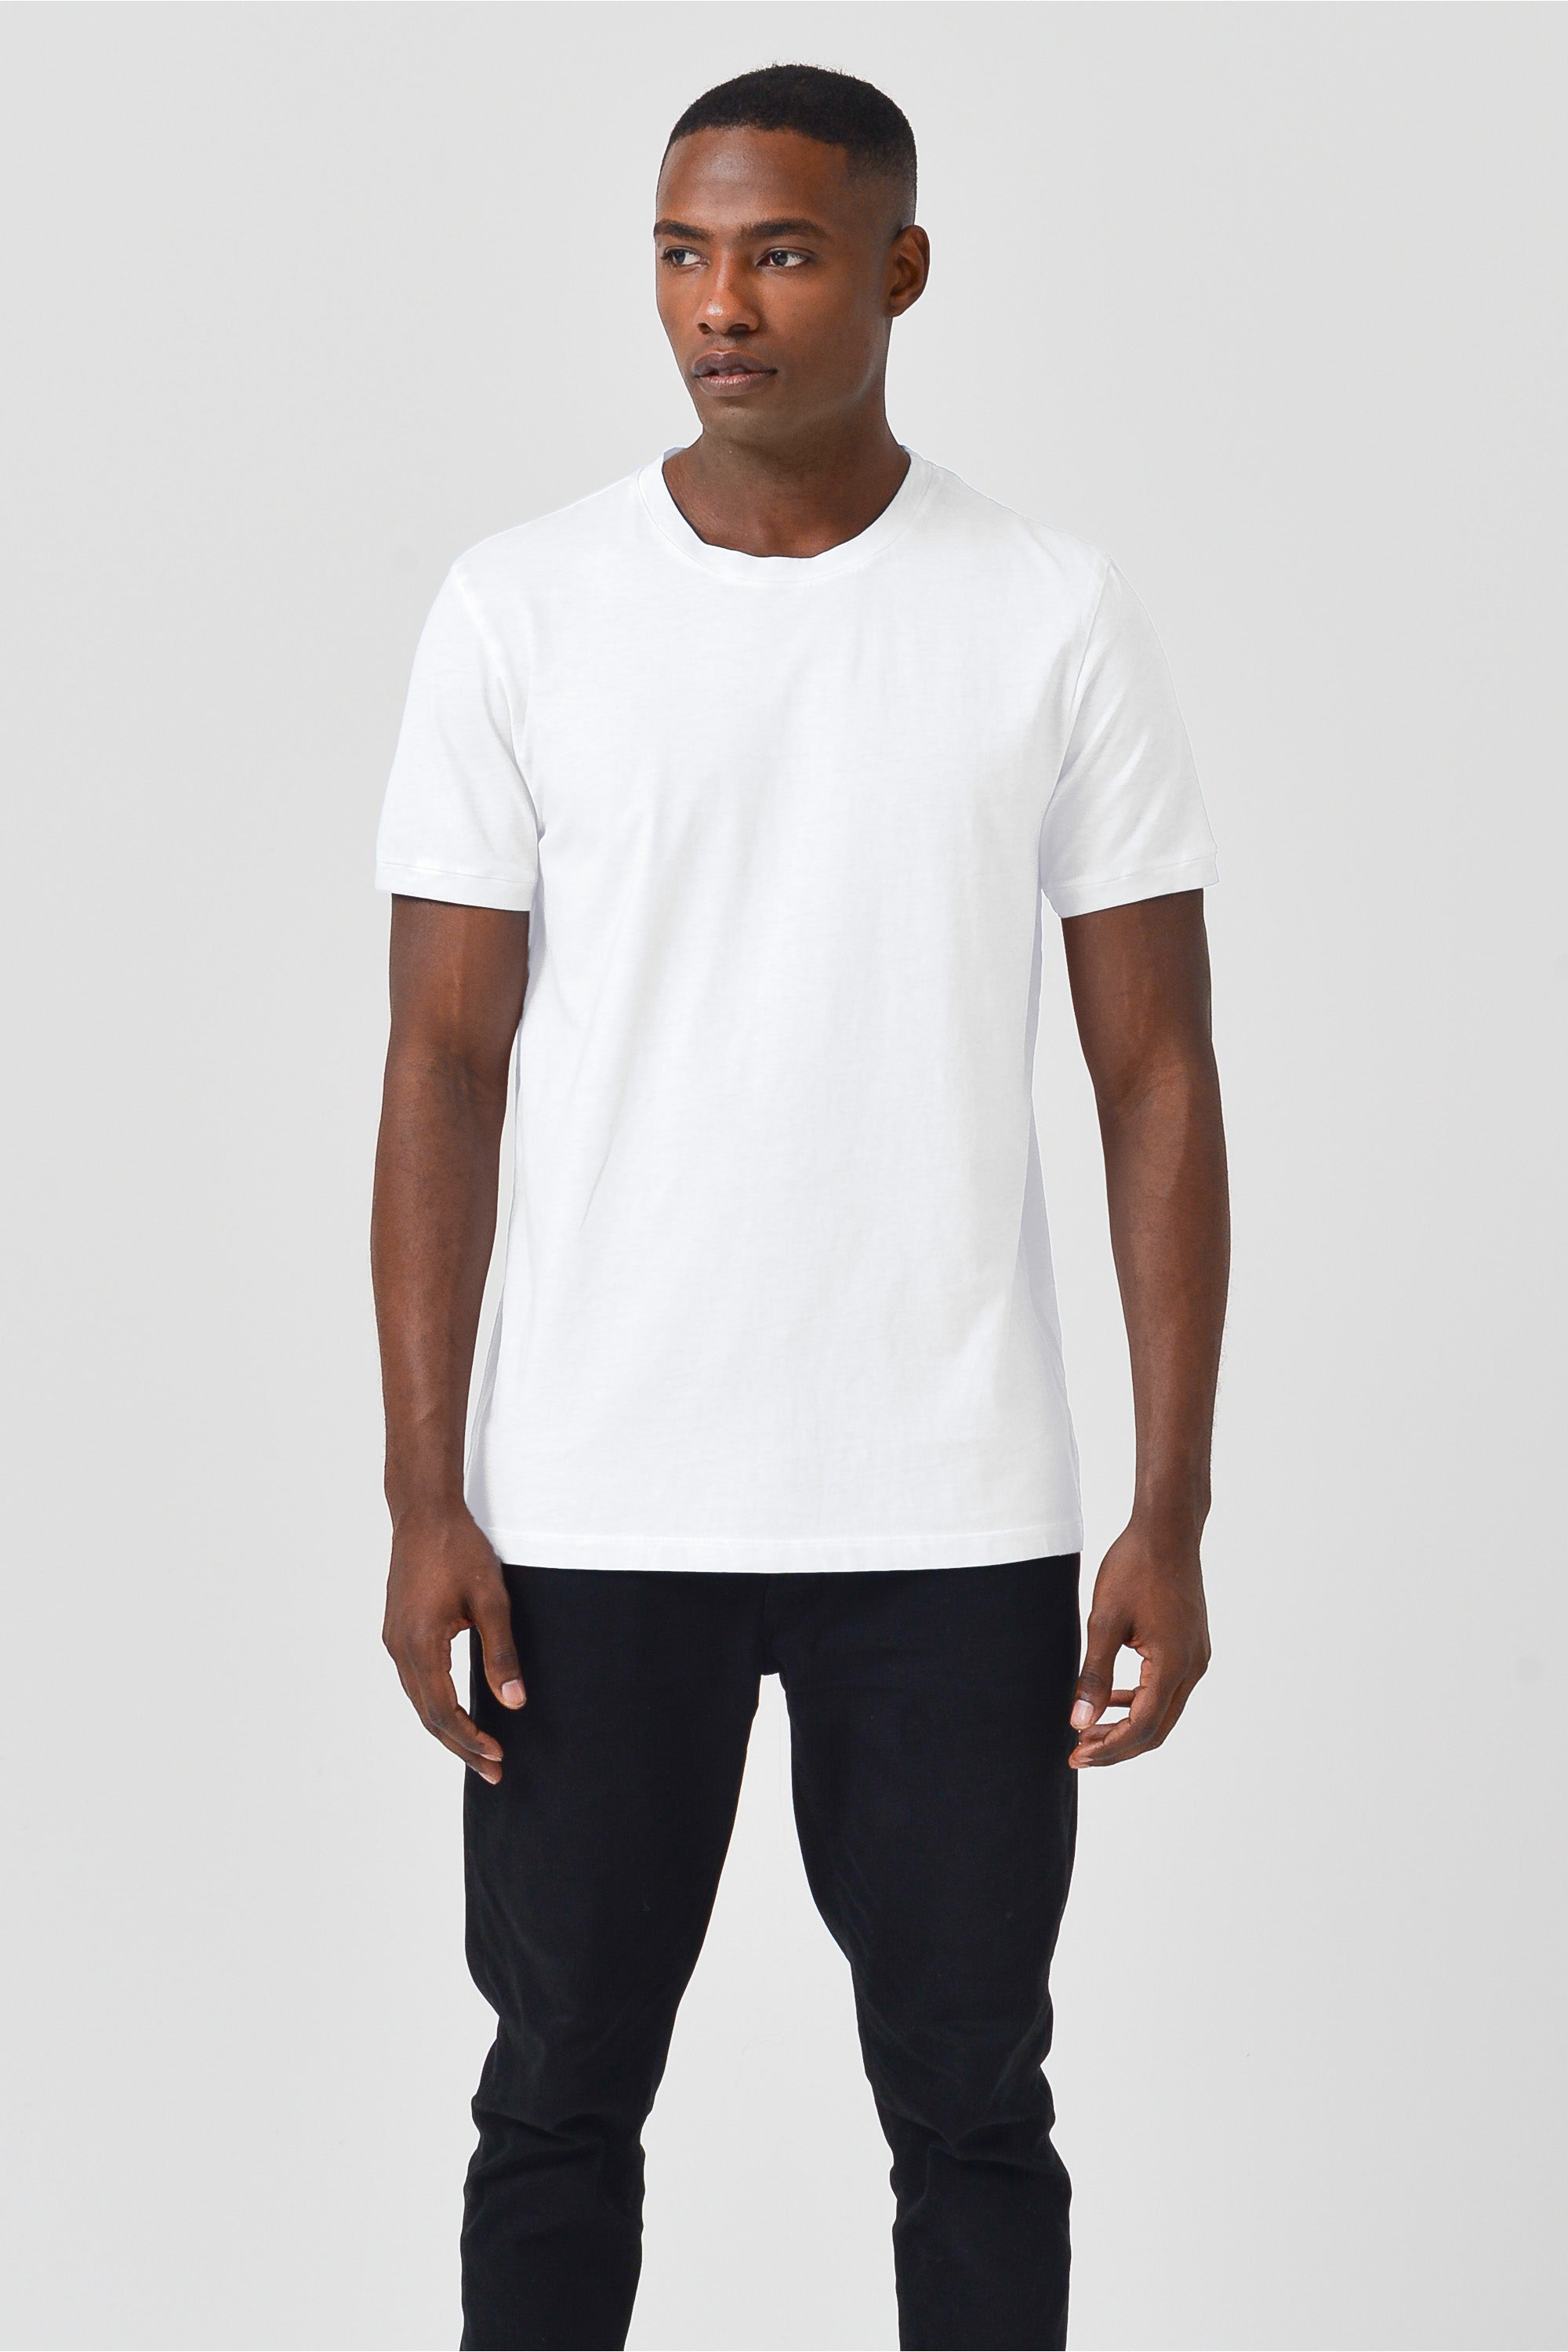 Smart Casual Cotton T-Shirt - White